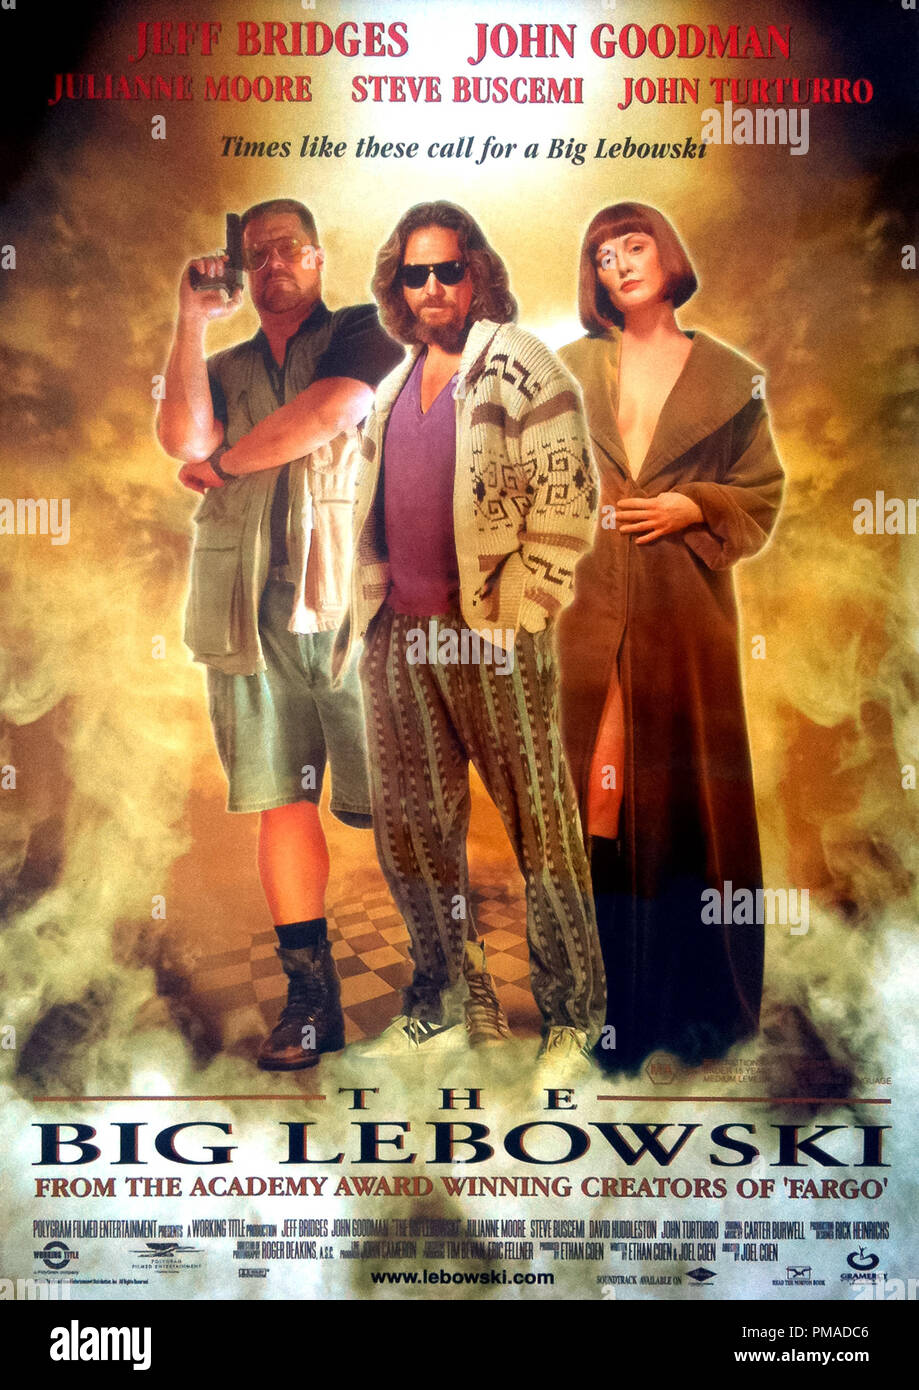 The Big Lebowski - AUstralian Poster 1998 Gramercy Pictures  Jeff Bridges, John Goodman, Julianne Moore   File Reference # 32509 055THA Stock Photo